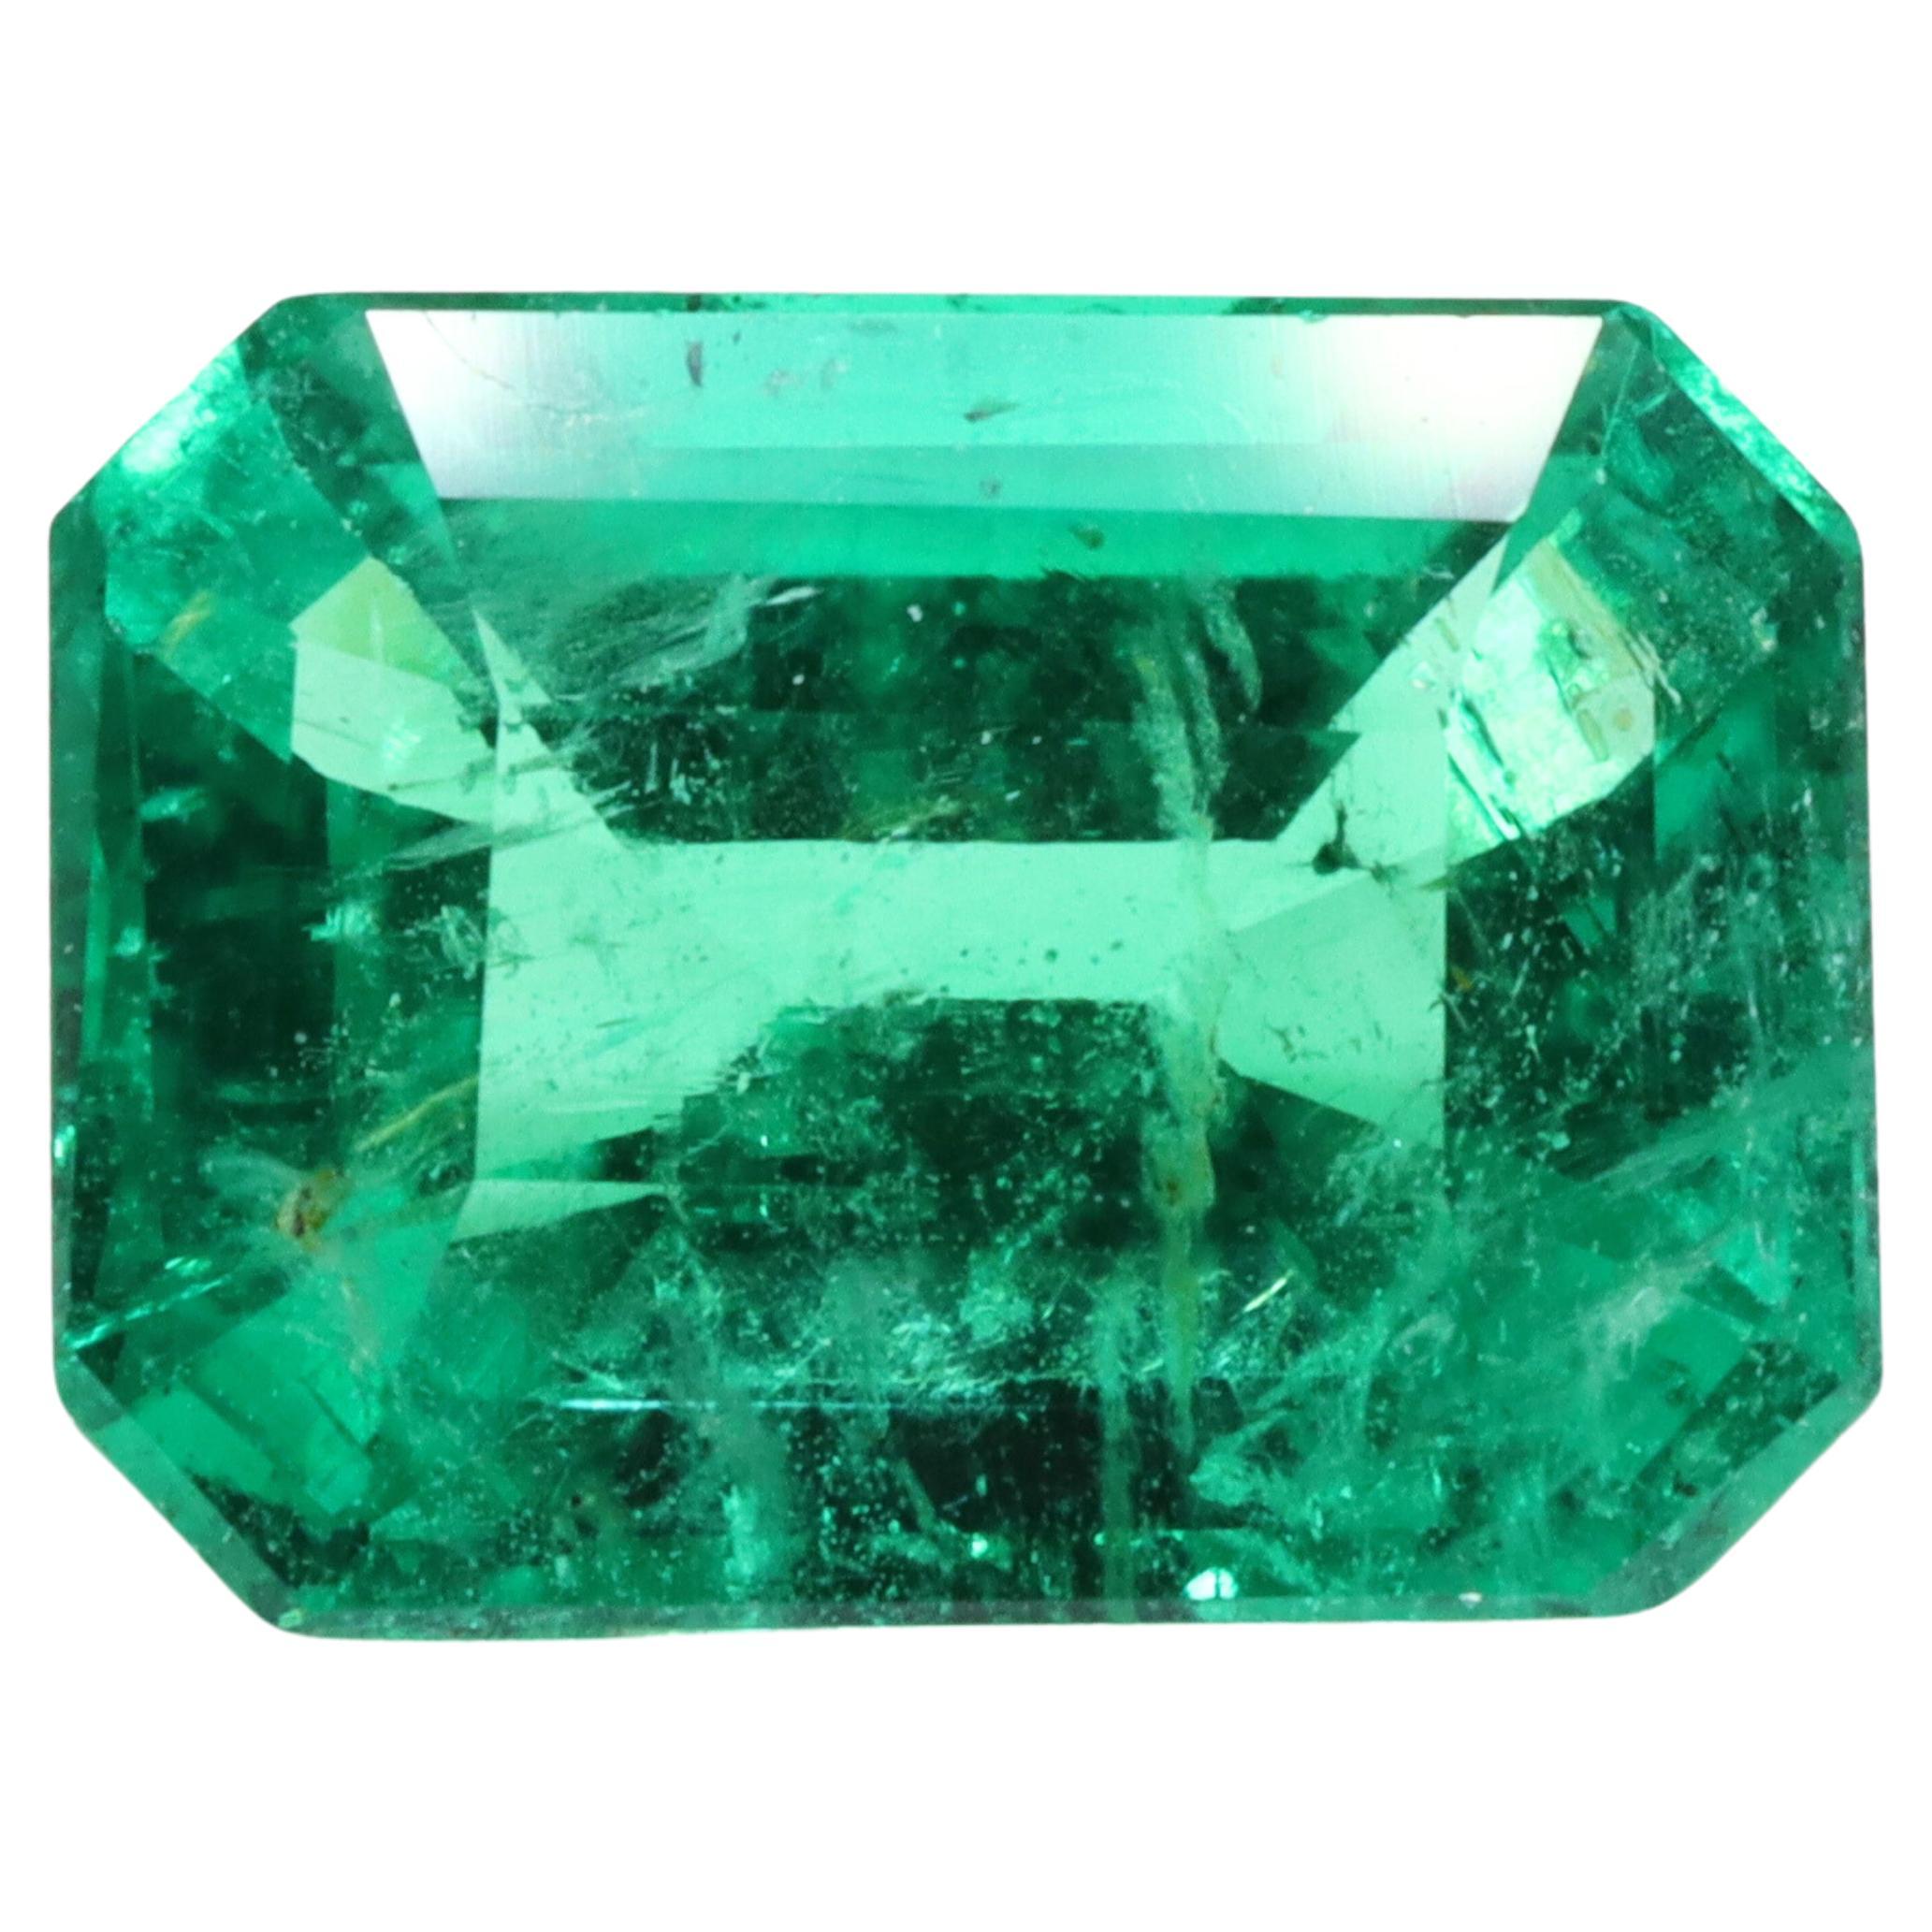 Certified Intense / Vivid Green Emerald 1.01ct - Minor Oil